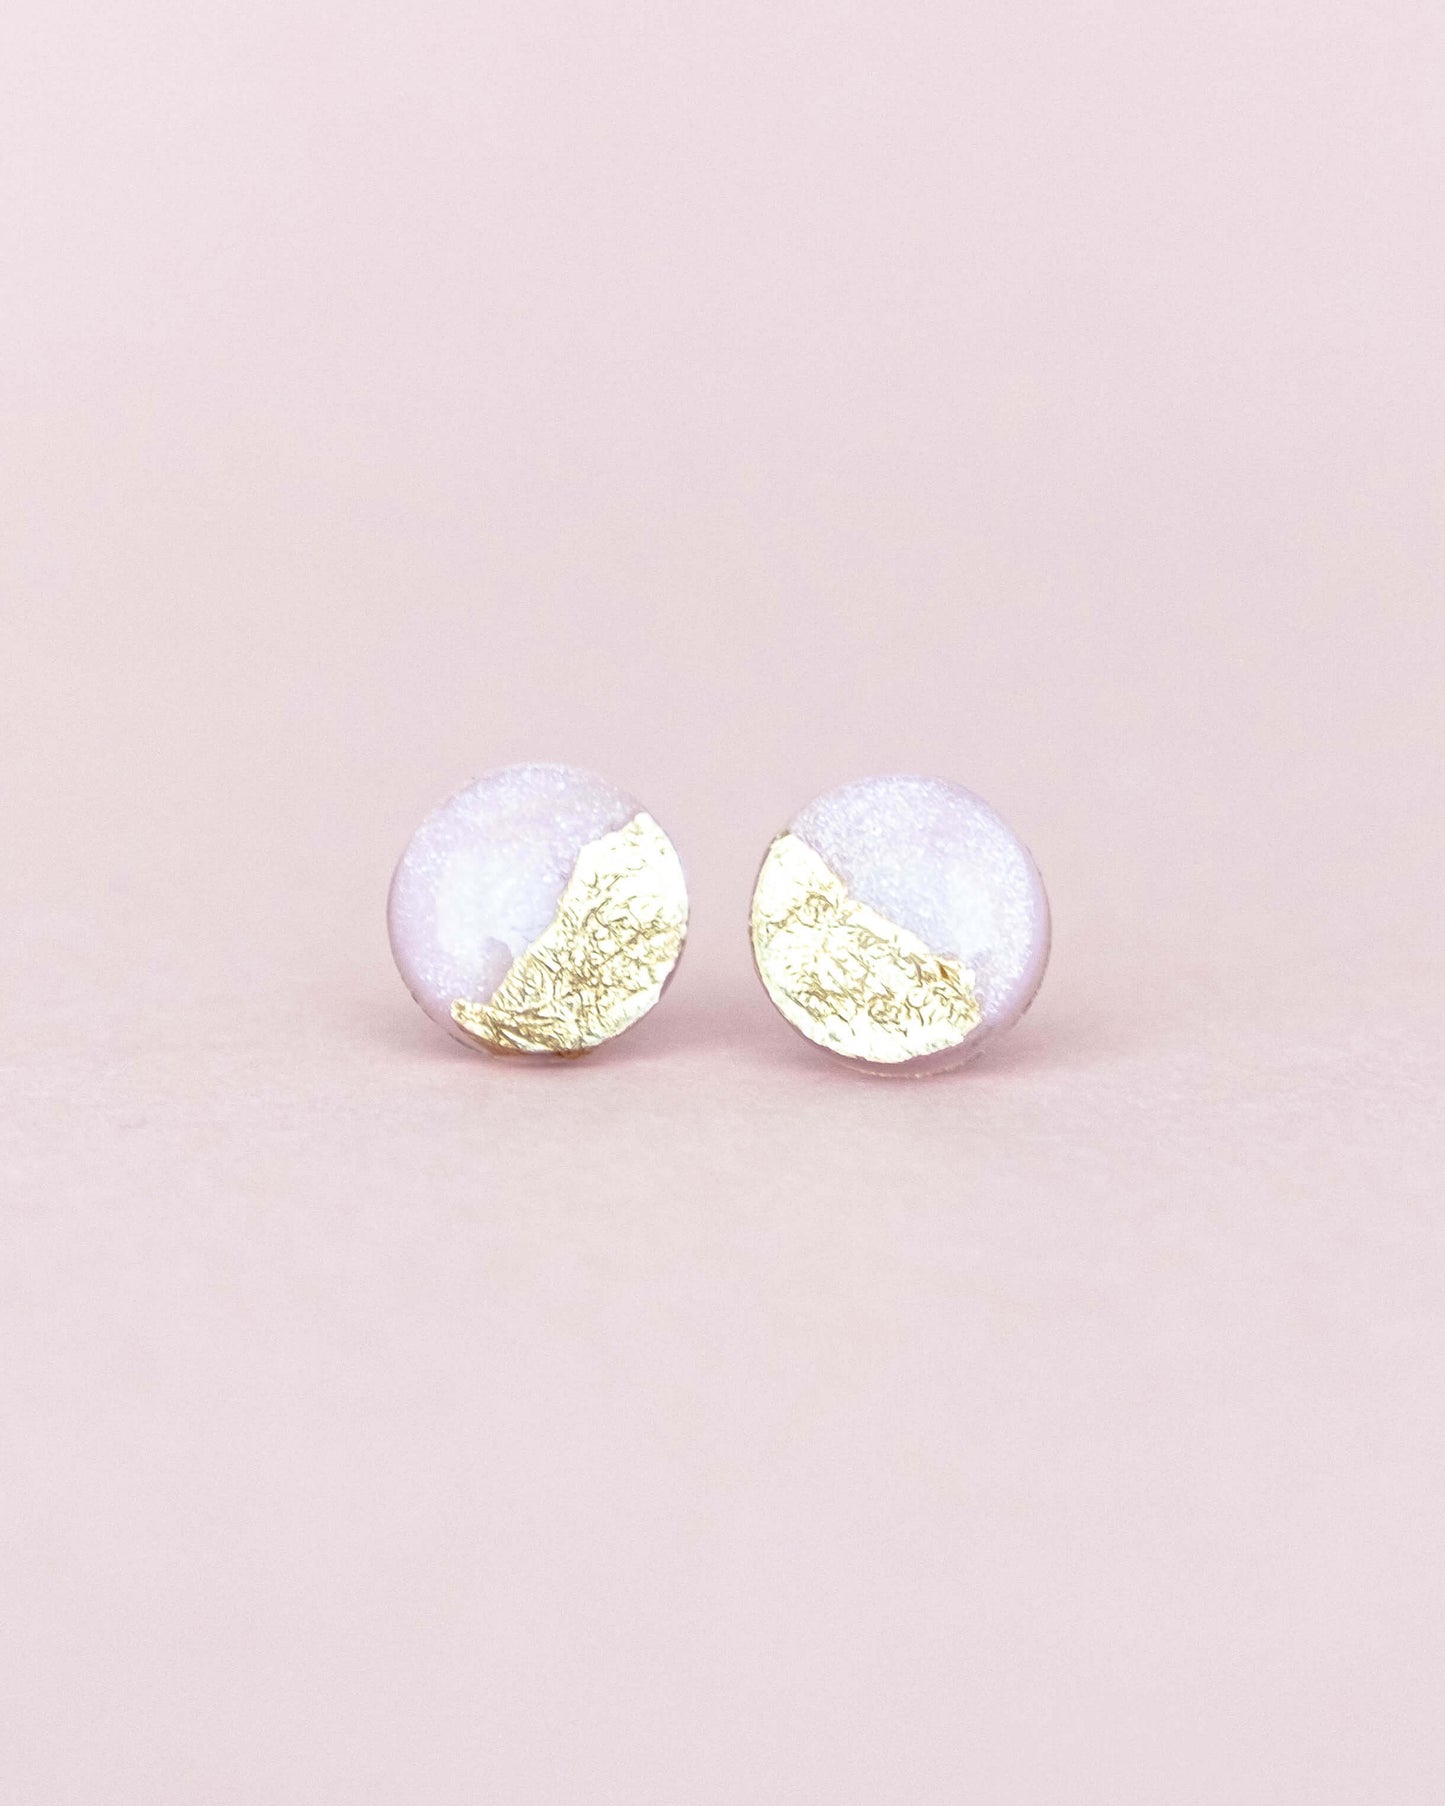 Blush pink stud earrings